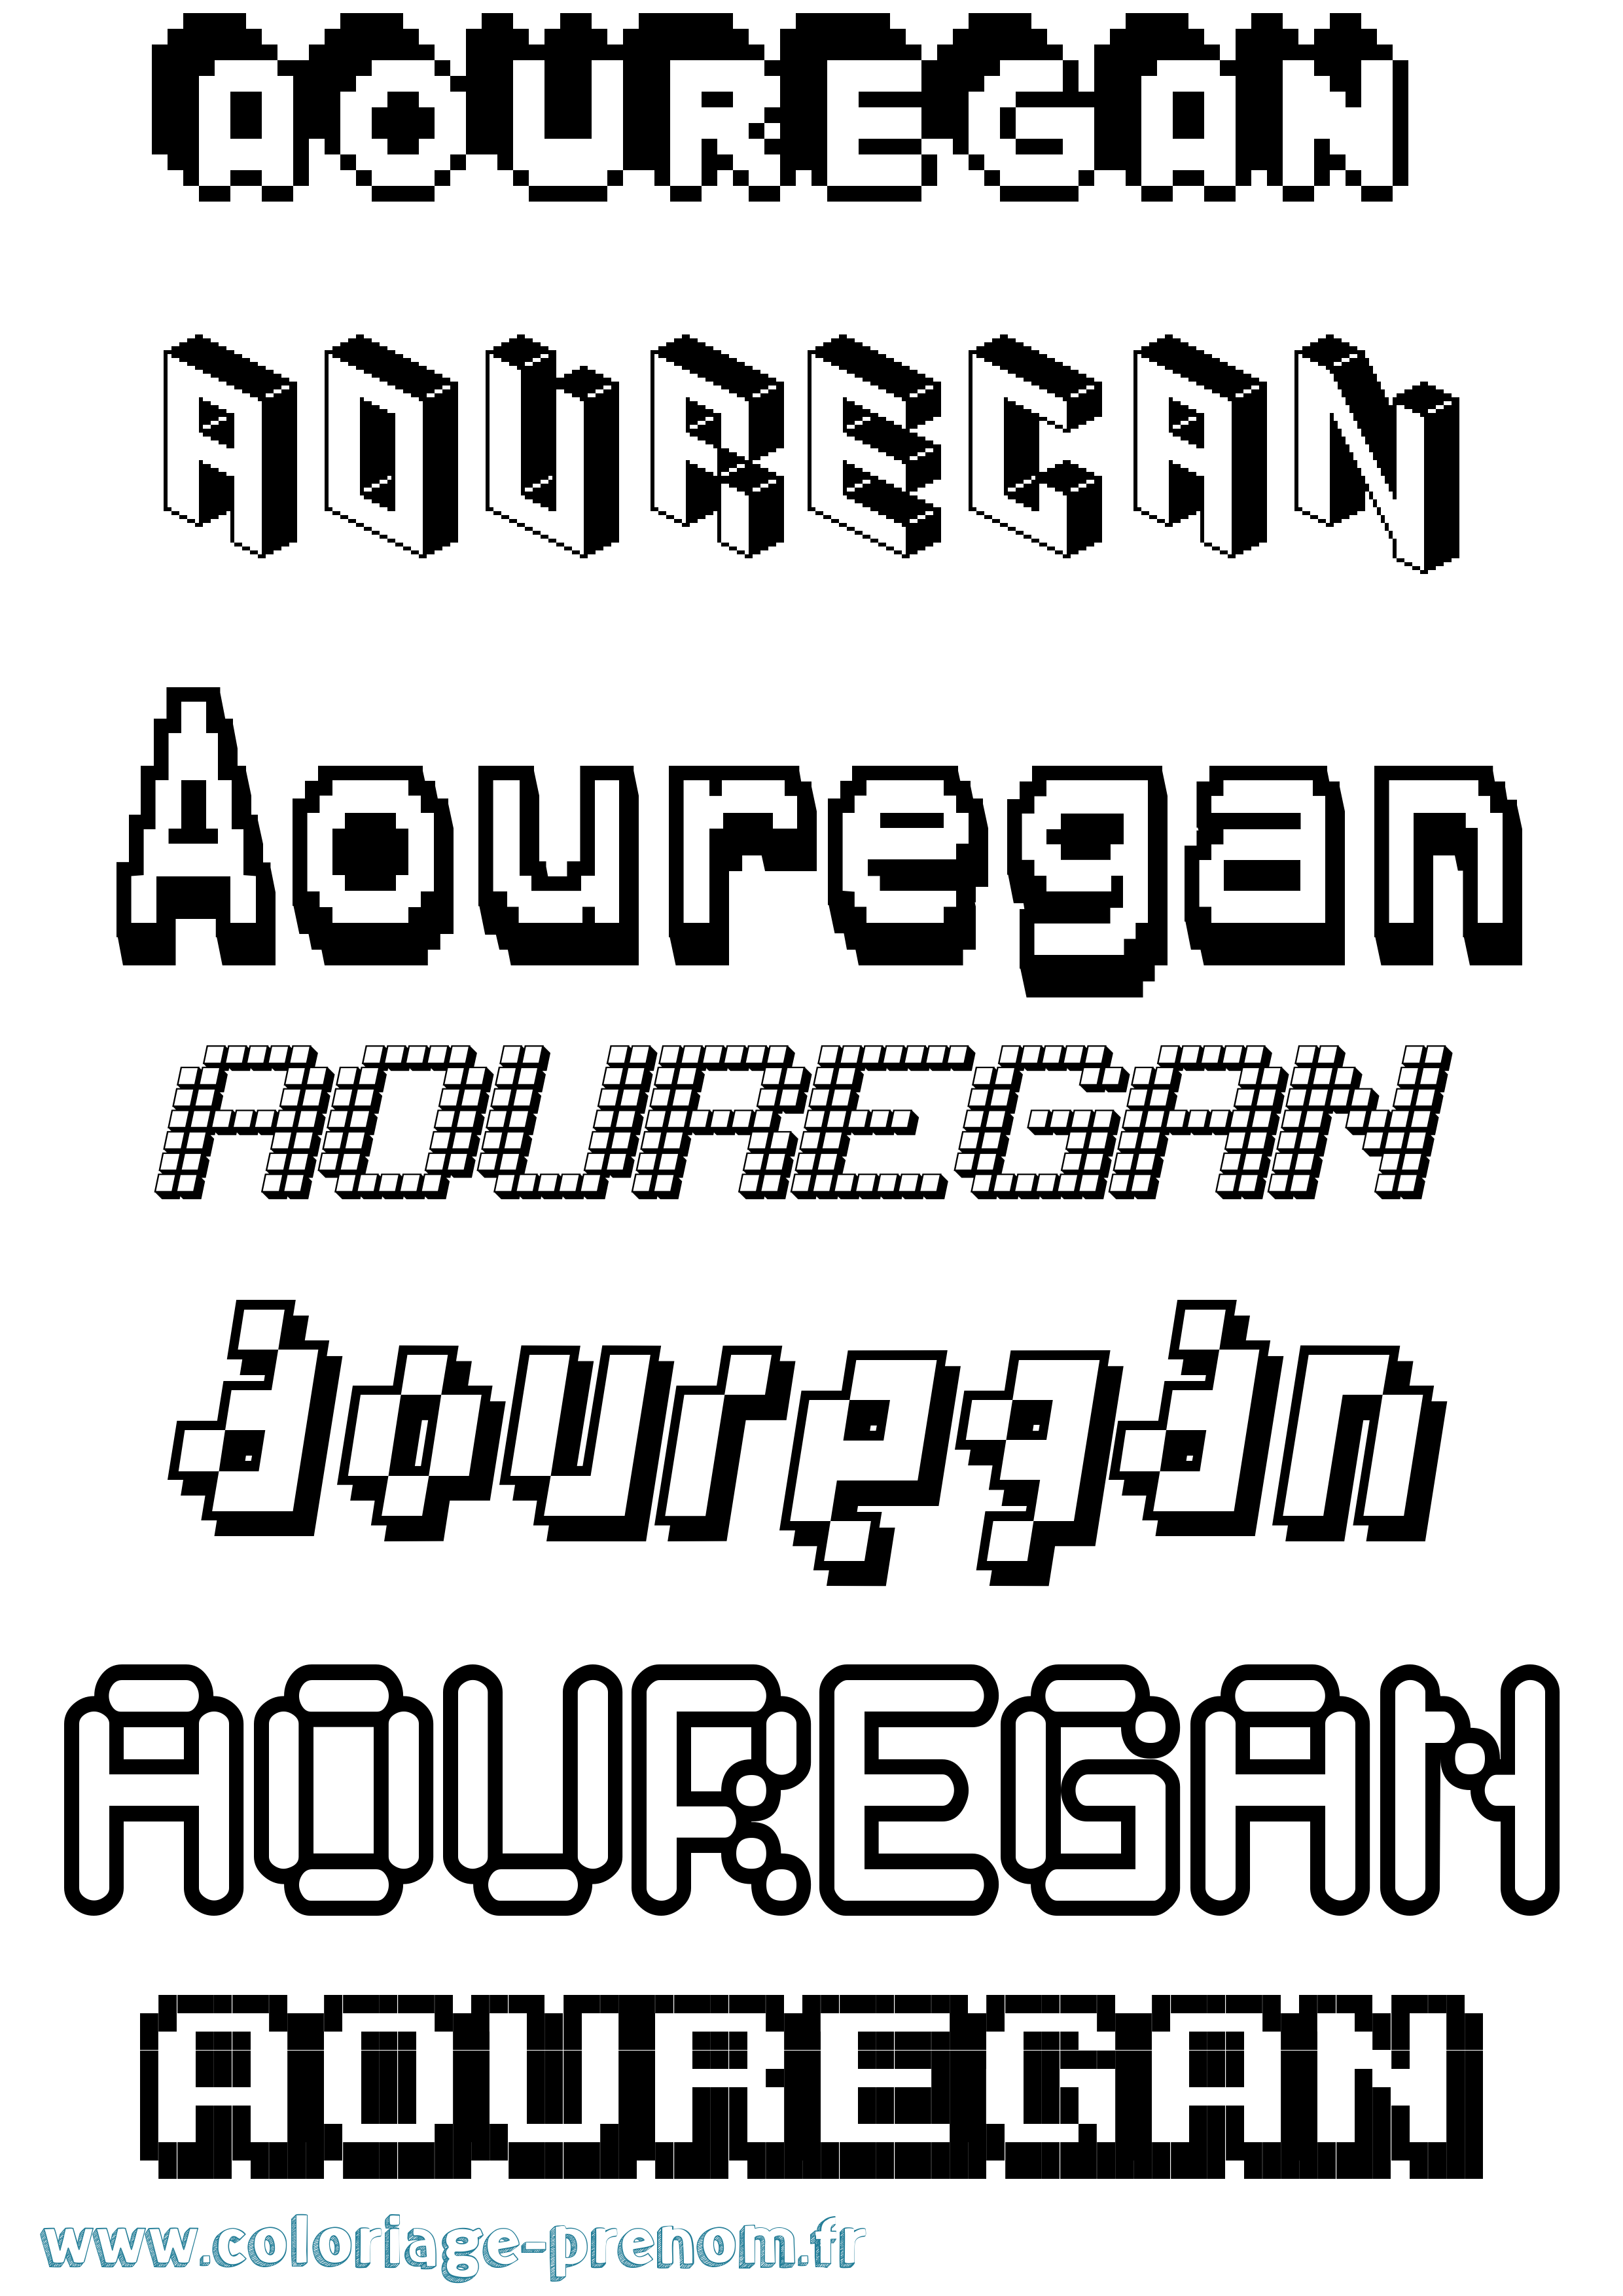 Coloriage prénom Aouregan Pixel